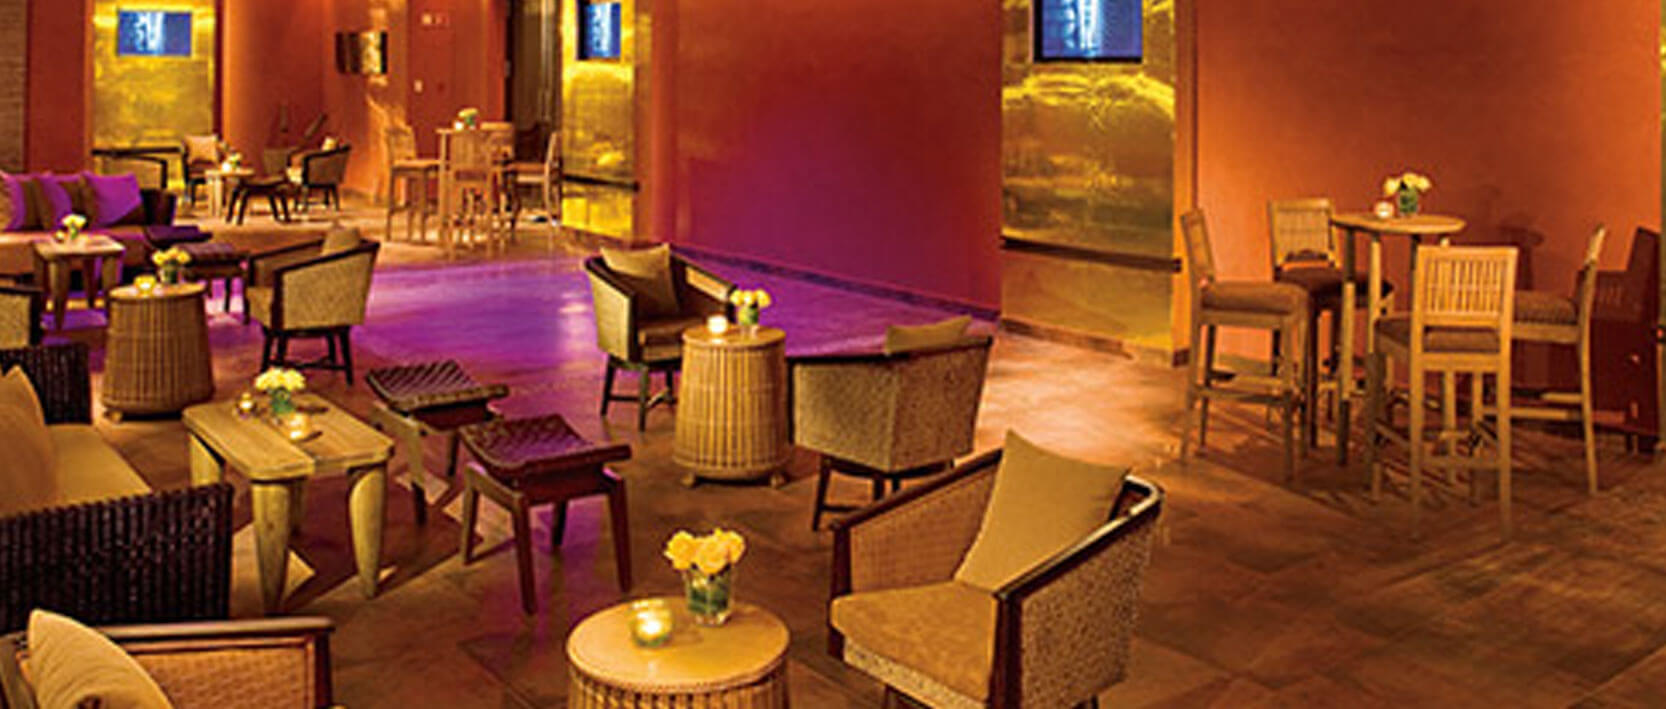 Dreams Riviera Cancun Resort Restaurants and Bars - Revive